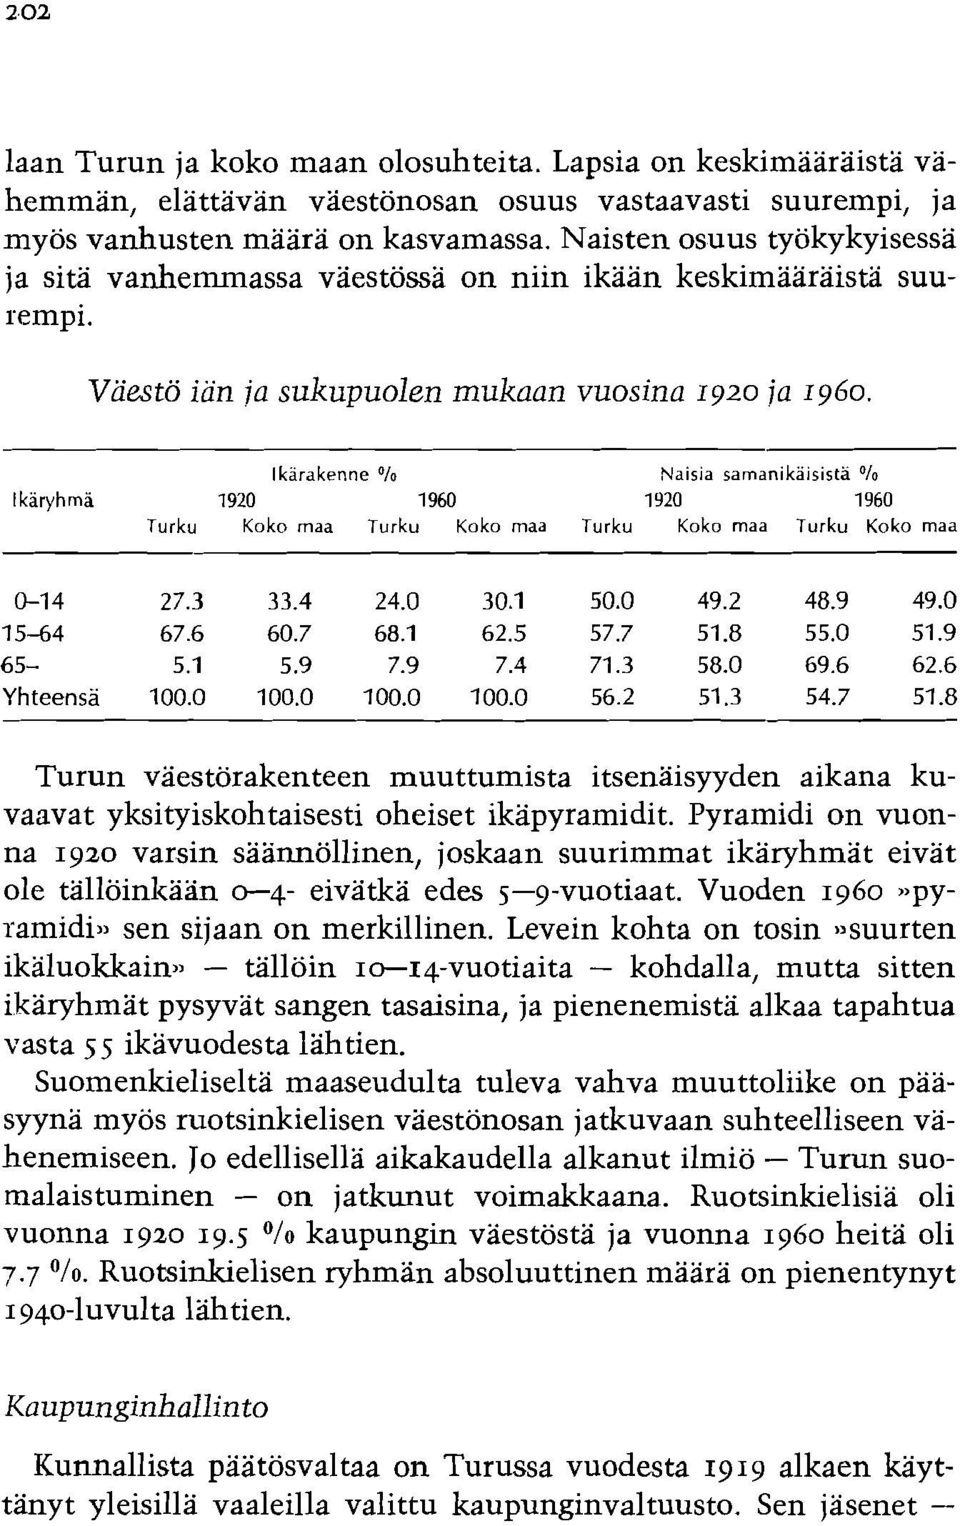 Ikarakenne % Naisia samanikaisista % I karyhma 1920 1960 1920 1960 Turku Koko maa Turku Koko maa Turku Koko rnaa Turku Koko rnaa 0-1 4 27.3 33.4 24.0 30.1 50.0 49.2 48.9 49.0 15-64 67.6 60.7 68.1 62.